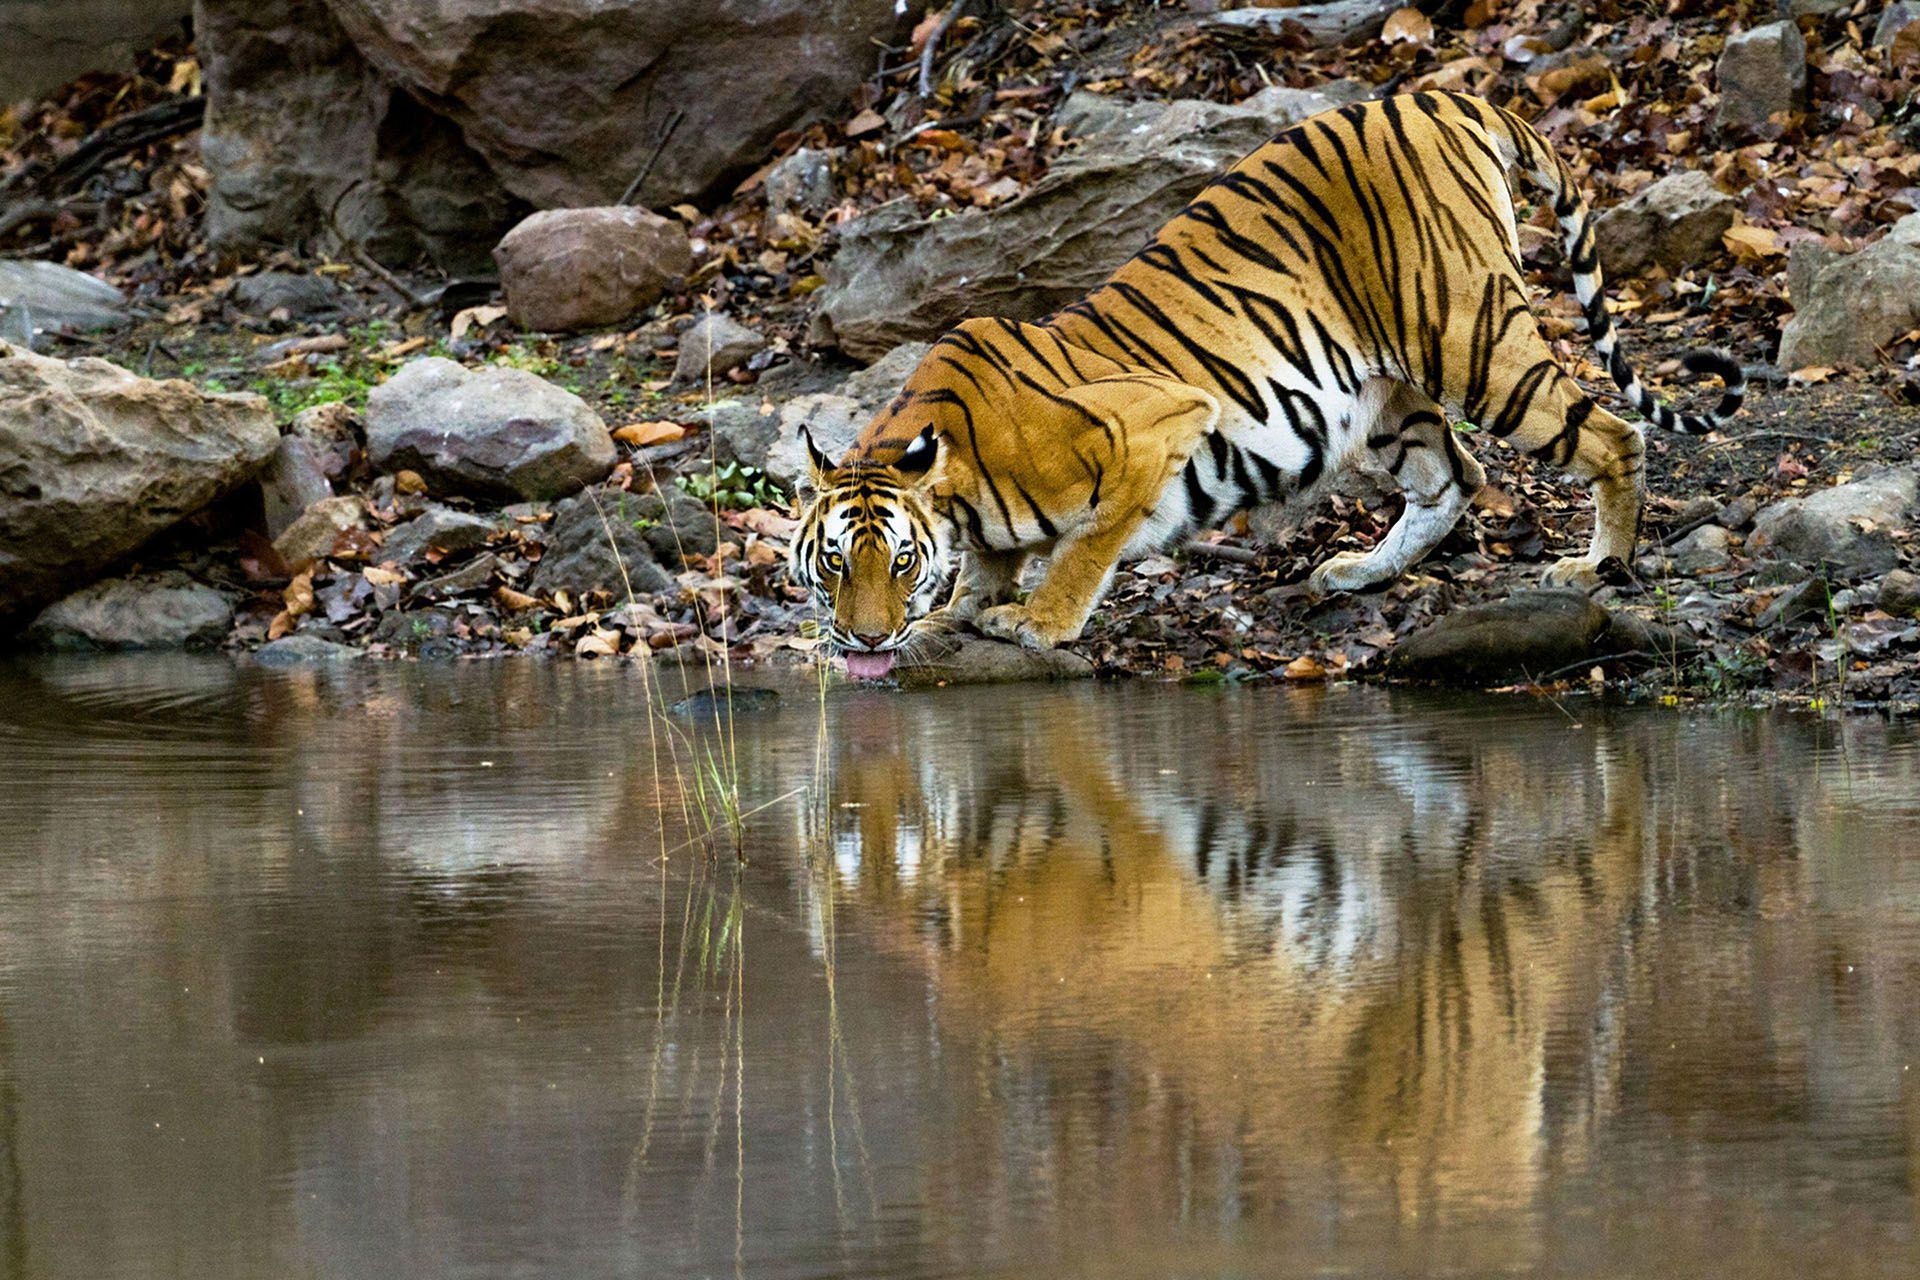 Photograph by Nitin Prabhudesai, National Geographic